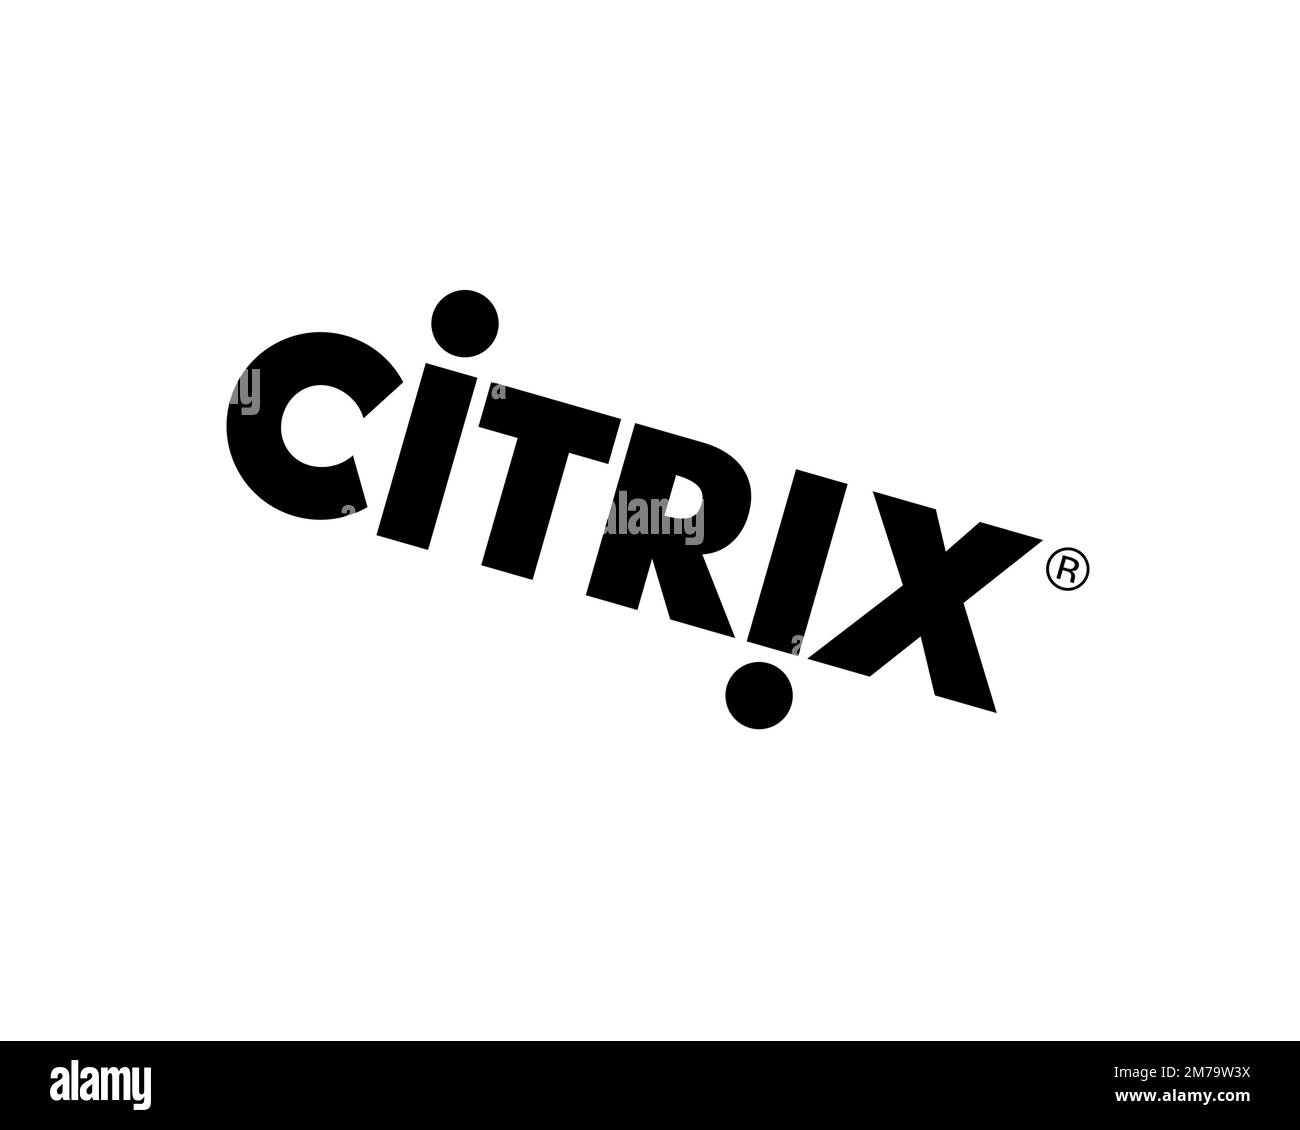 Citrix Online, rotated logo, white background B Stock Photo - Alamy